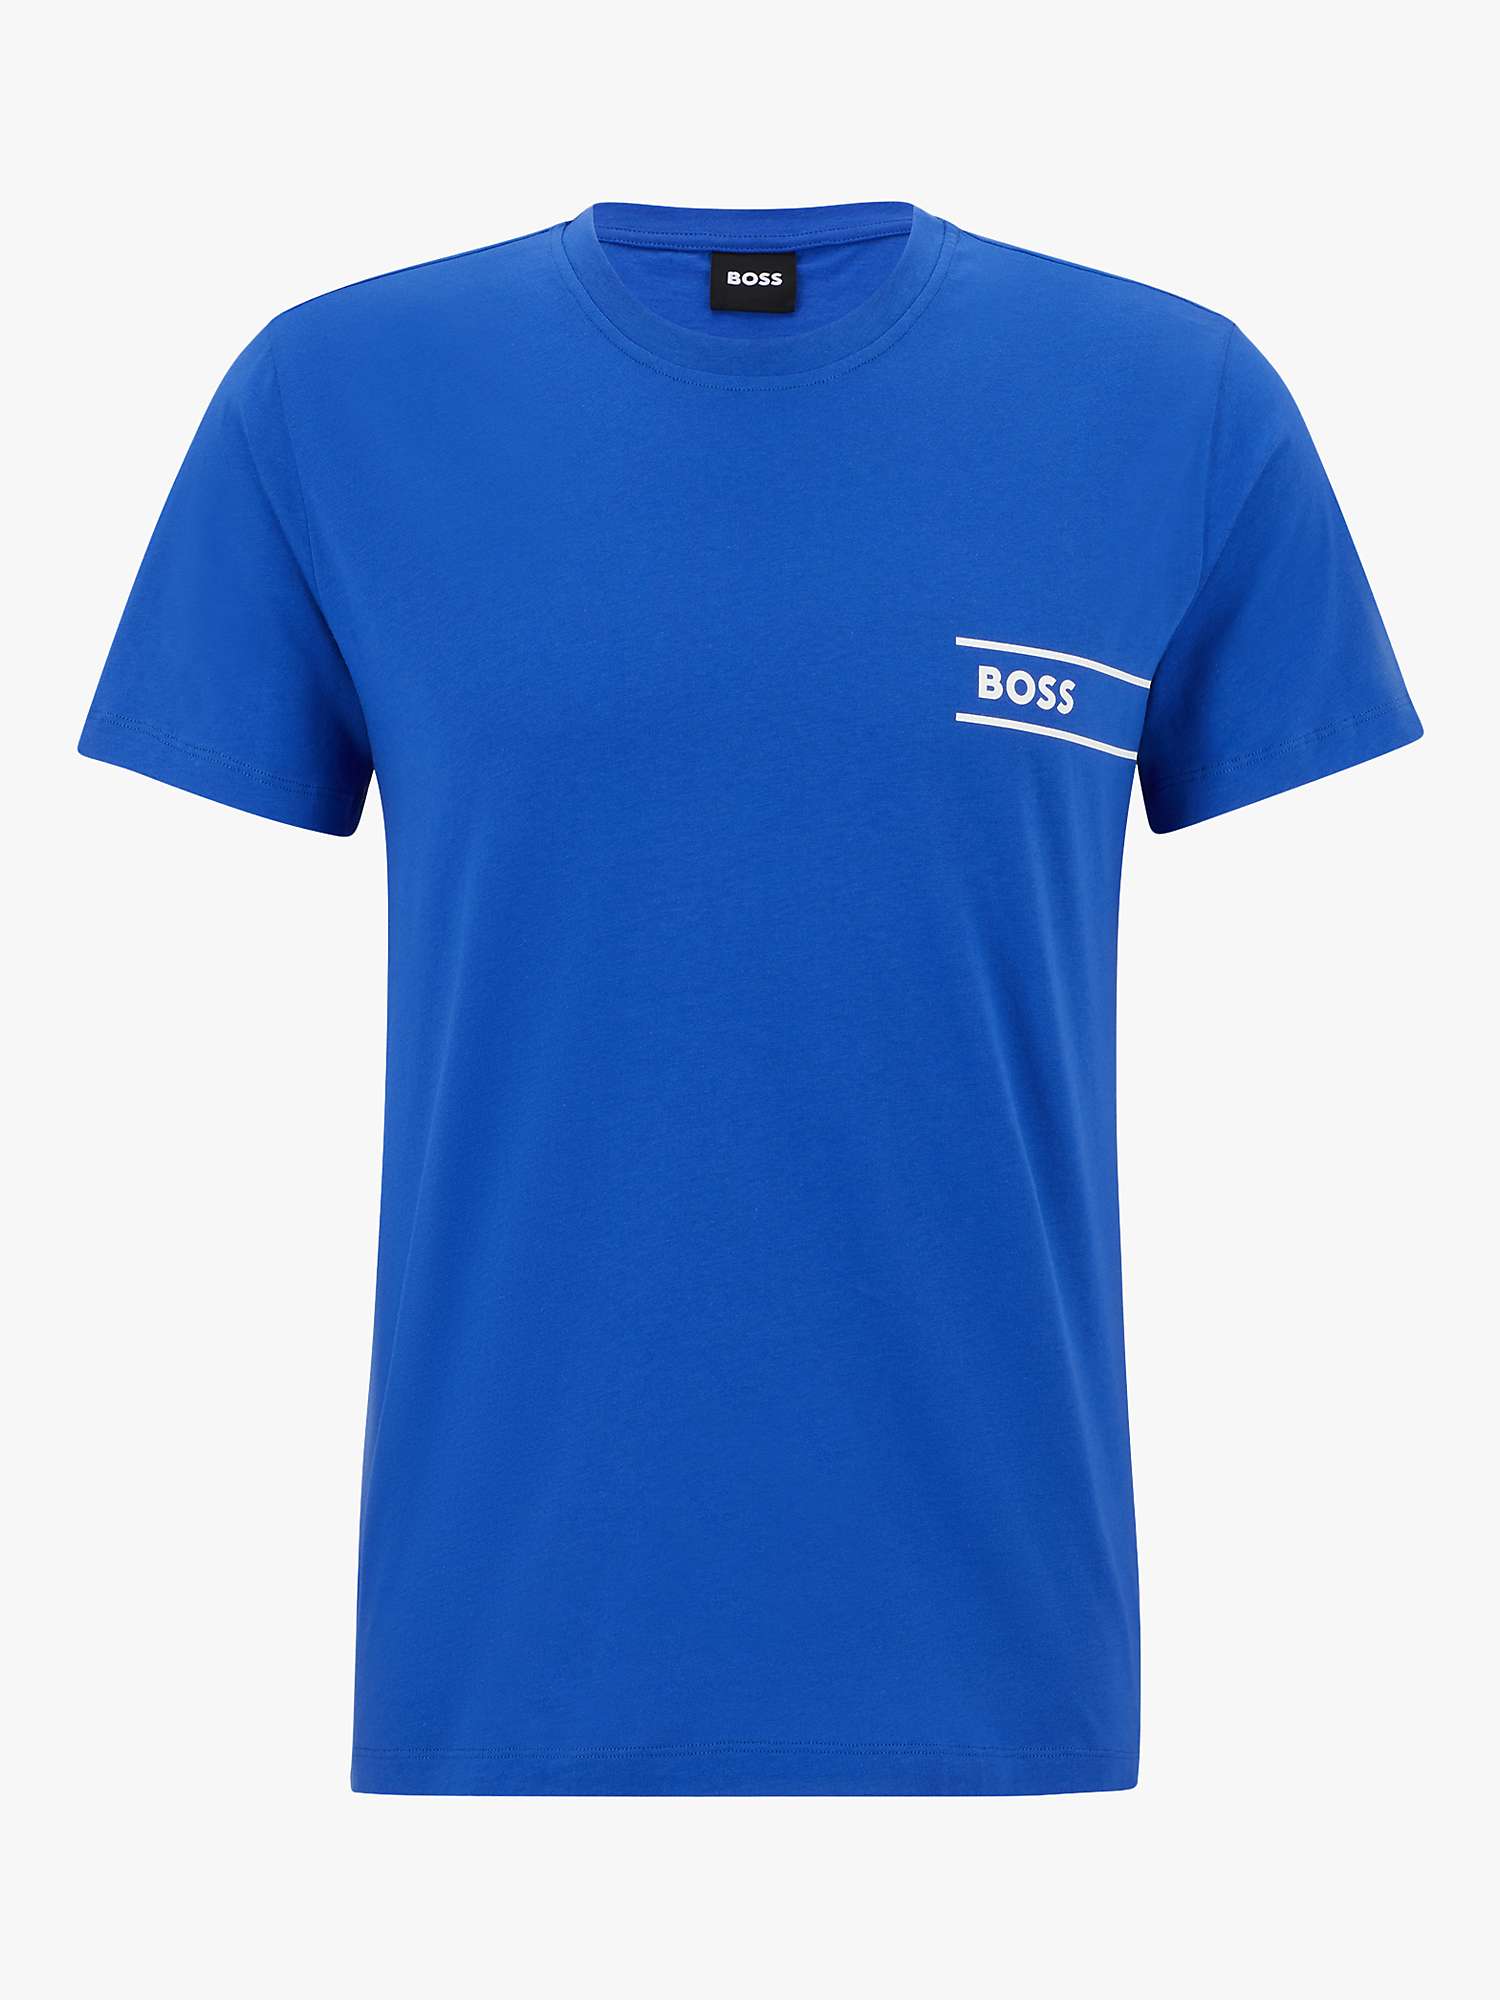 BOSS Cotton Lounge T-Shirt, Bright Blue at John Lewis & Partners